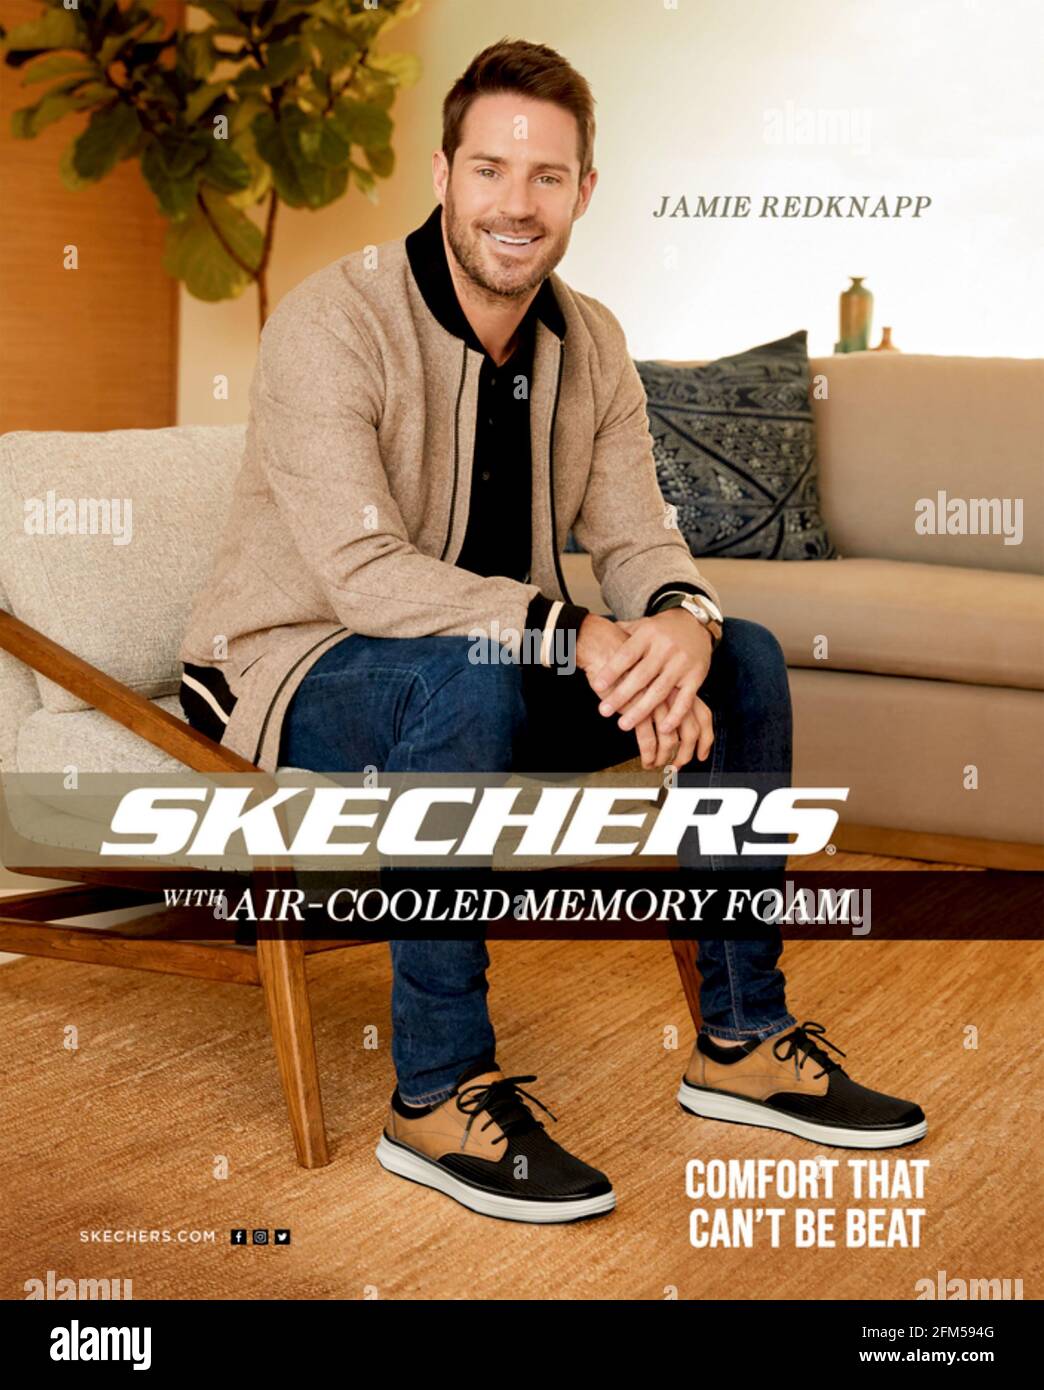 2020s UK Skechers Magazine Advert Stock Photo - Alamy